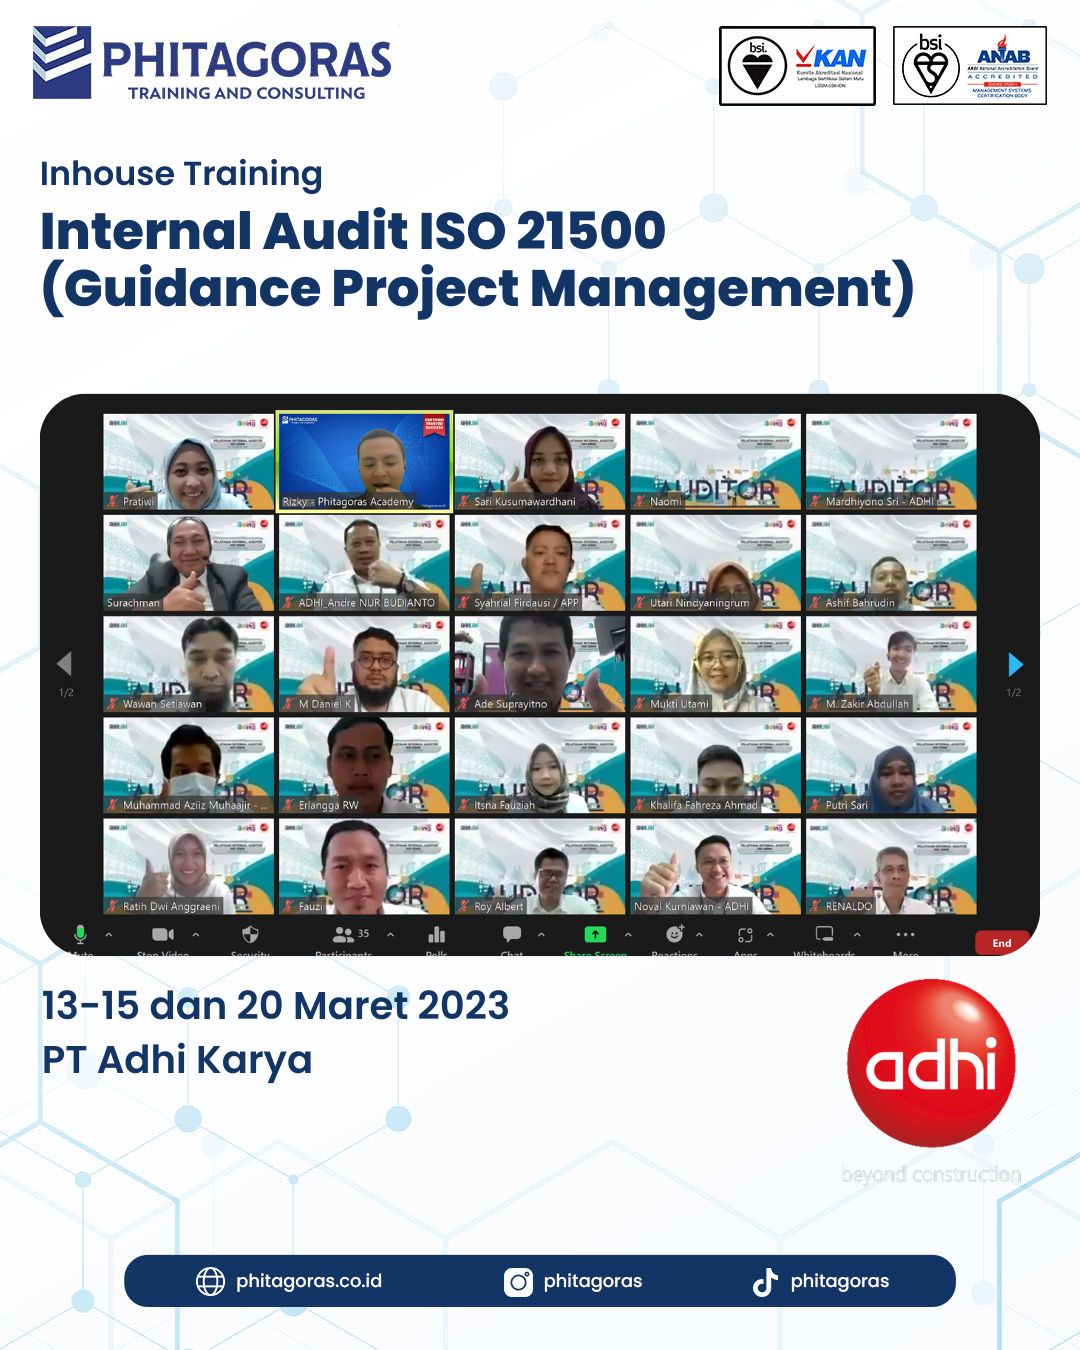 Inhouse Training Internal Audit ISO 21500 (Guidance Project Management) - PT Adhi Karya